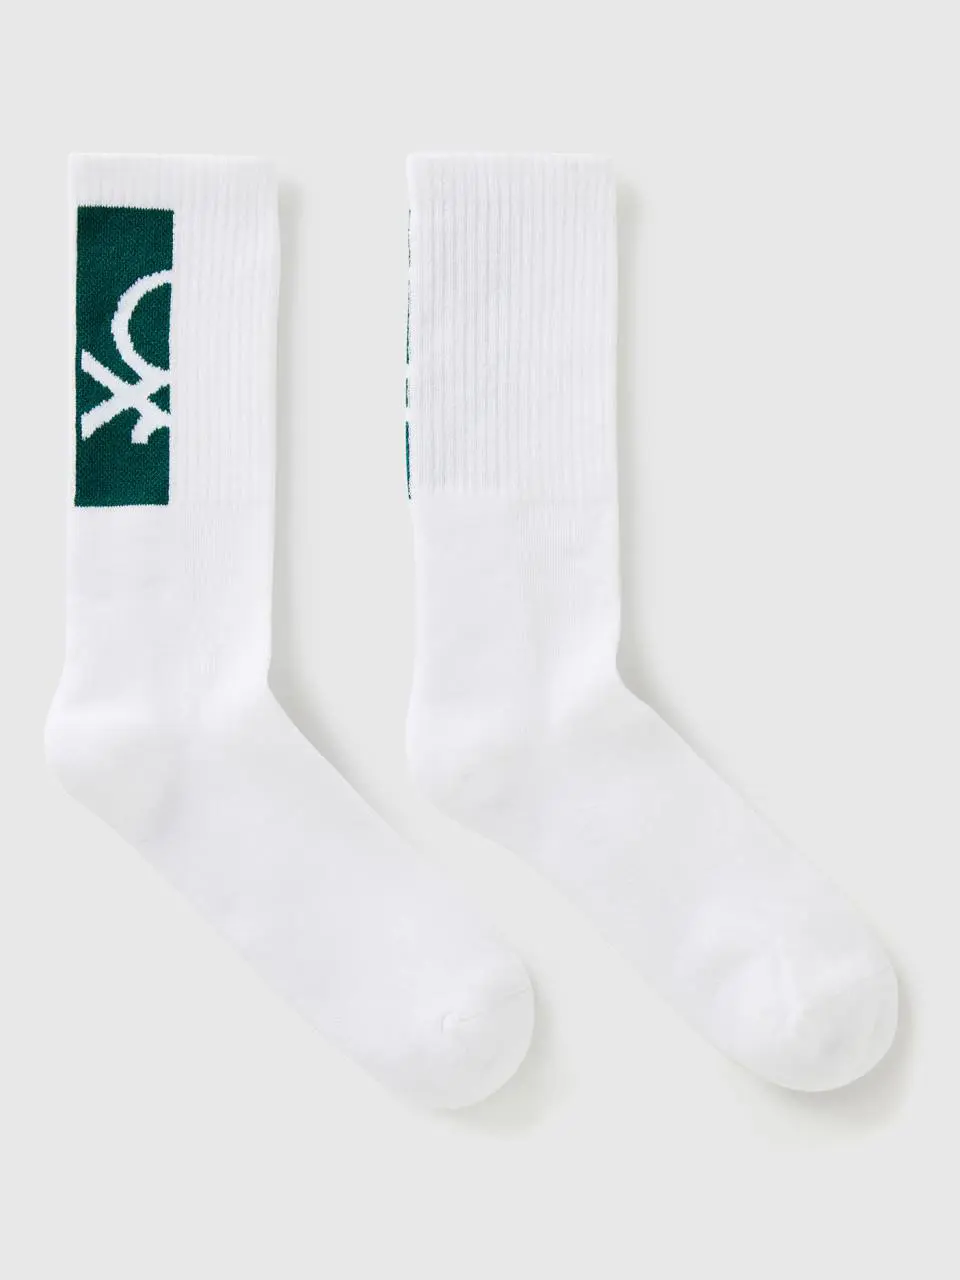 Benetton terry socks with logo. 1